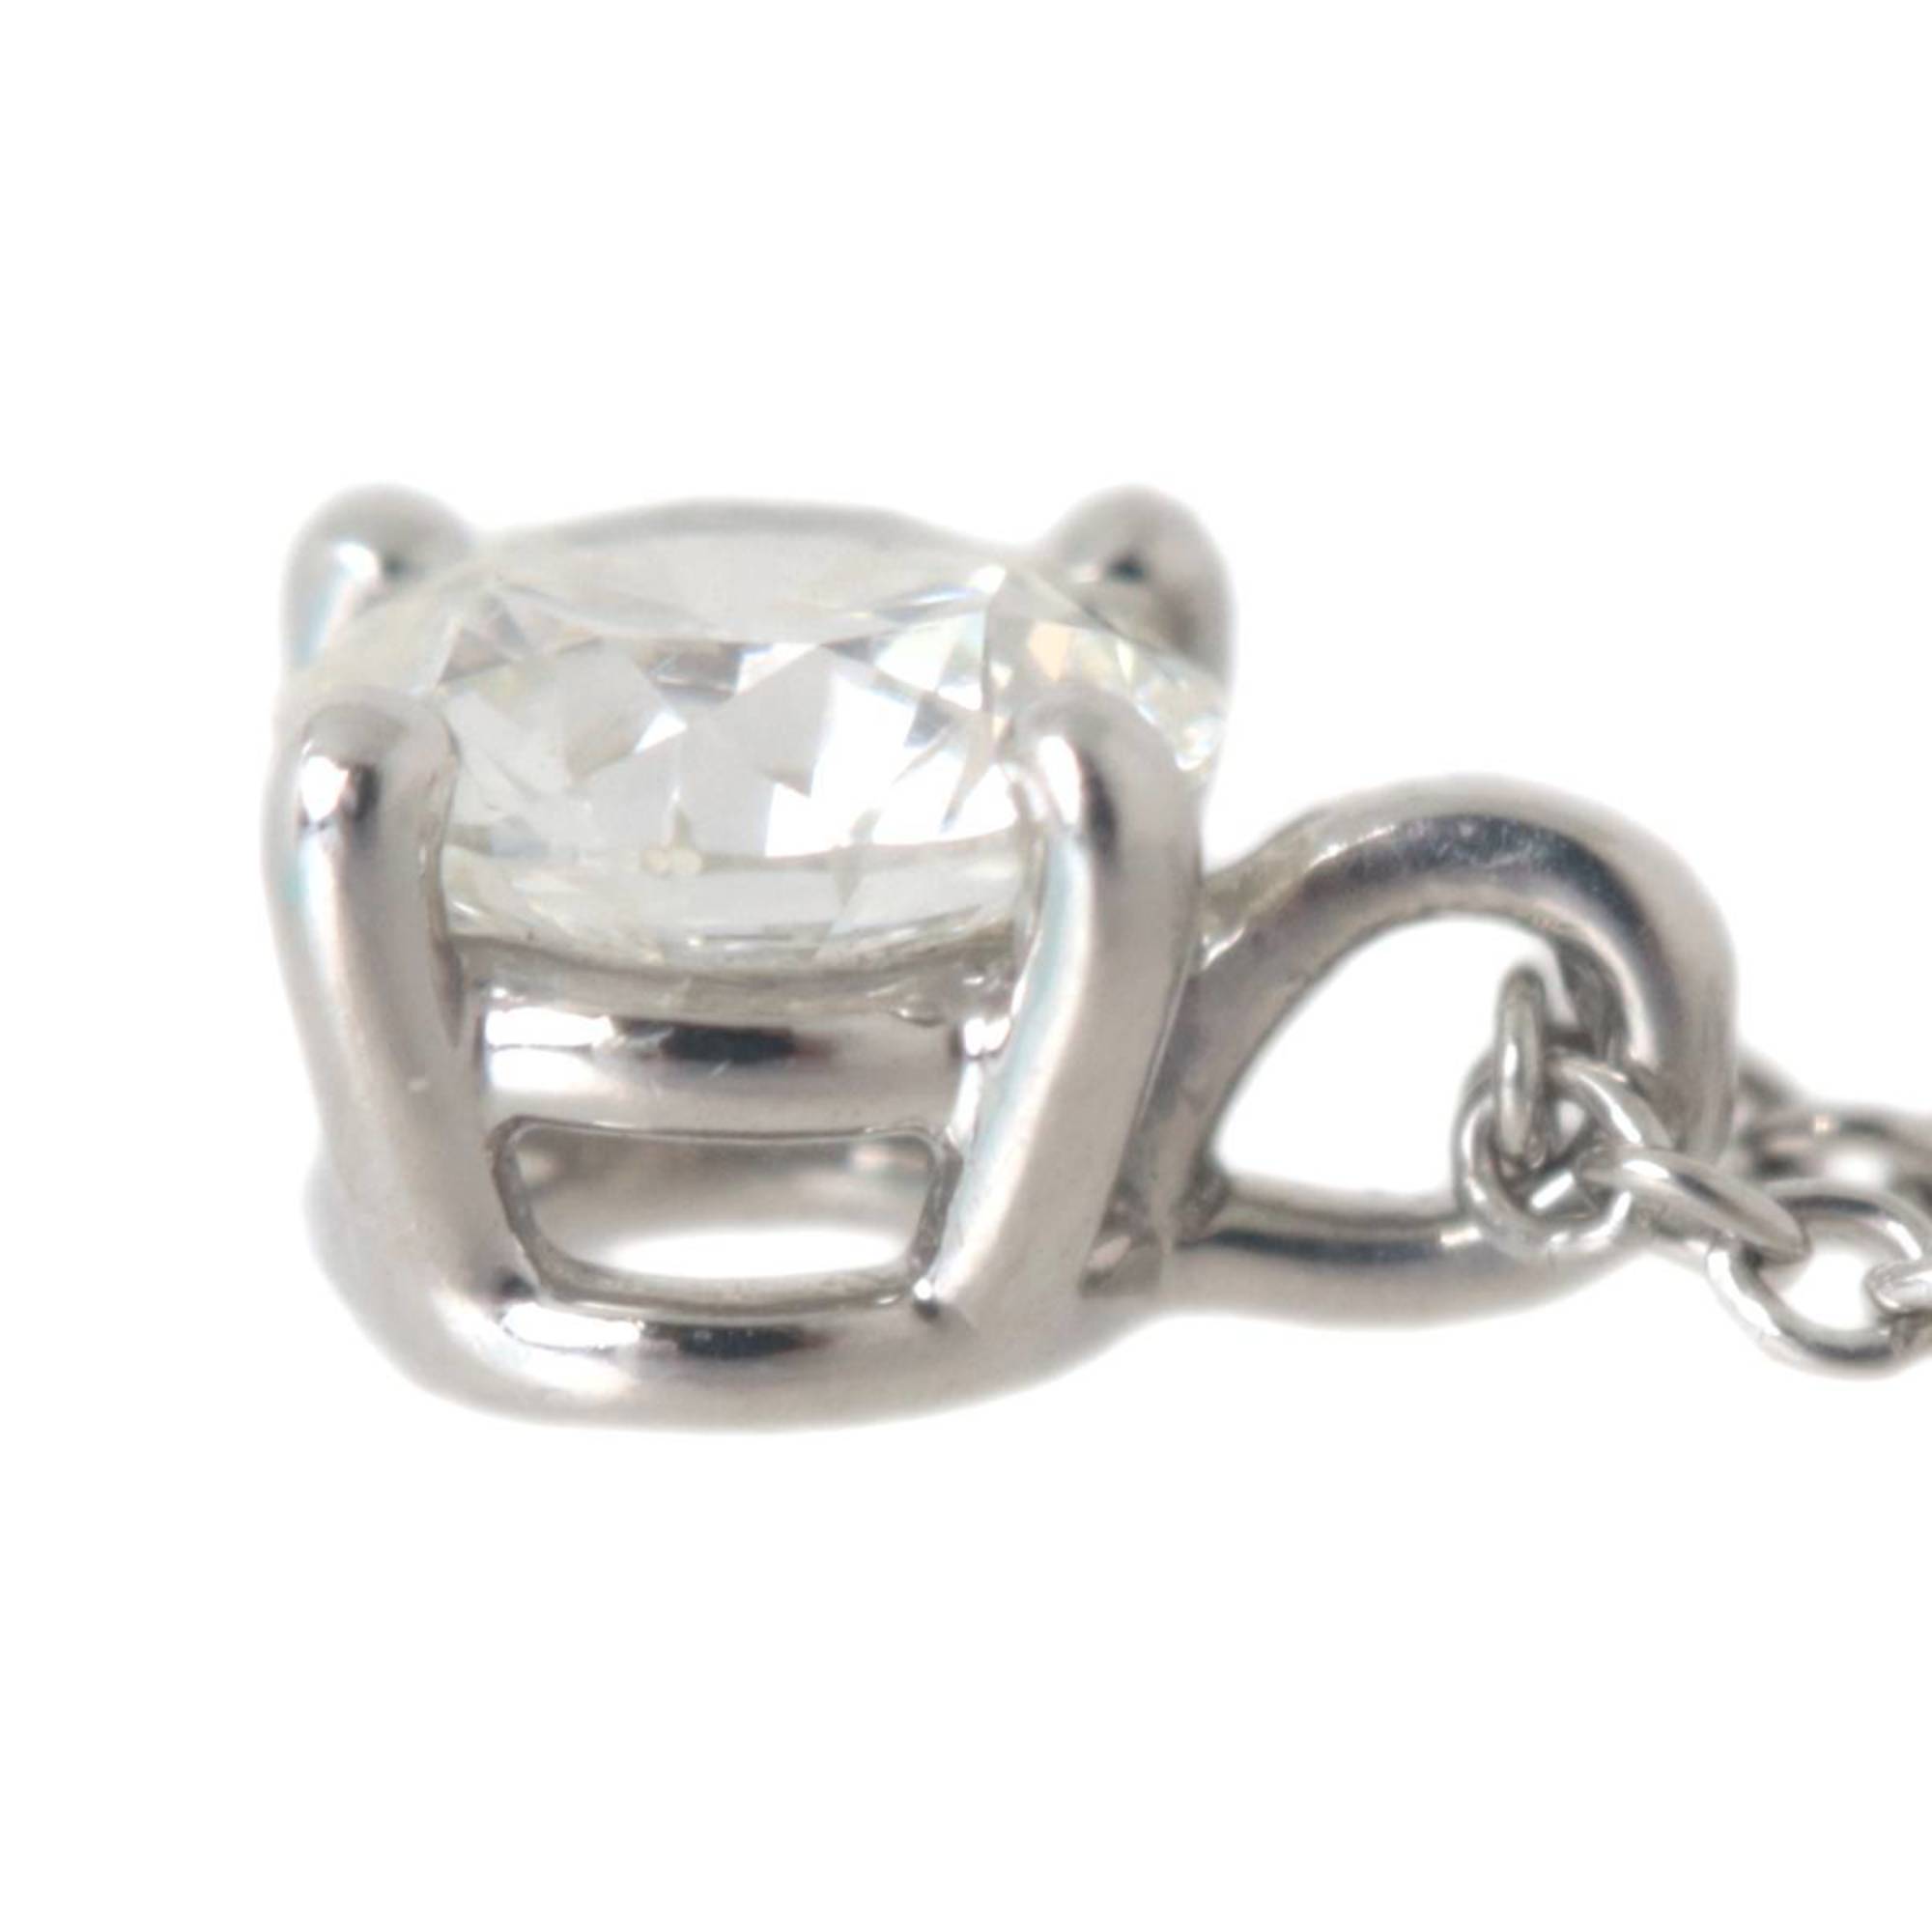 Tiffany&Co./Tiffany Pt950/Platinum 950 diamond pendant necklace 0.45ct BRILLIANT J VS1 ・Certificate